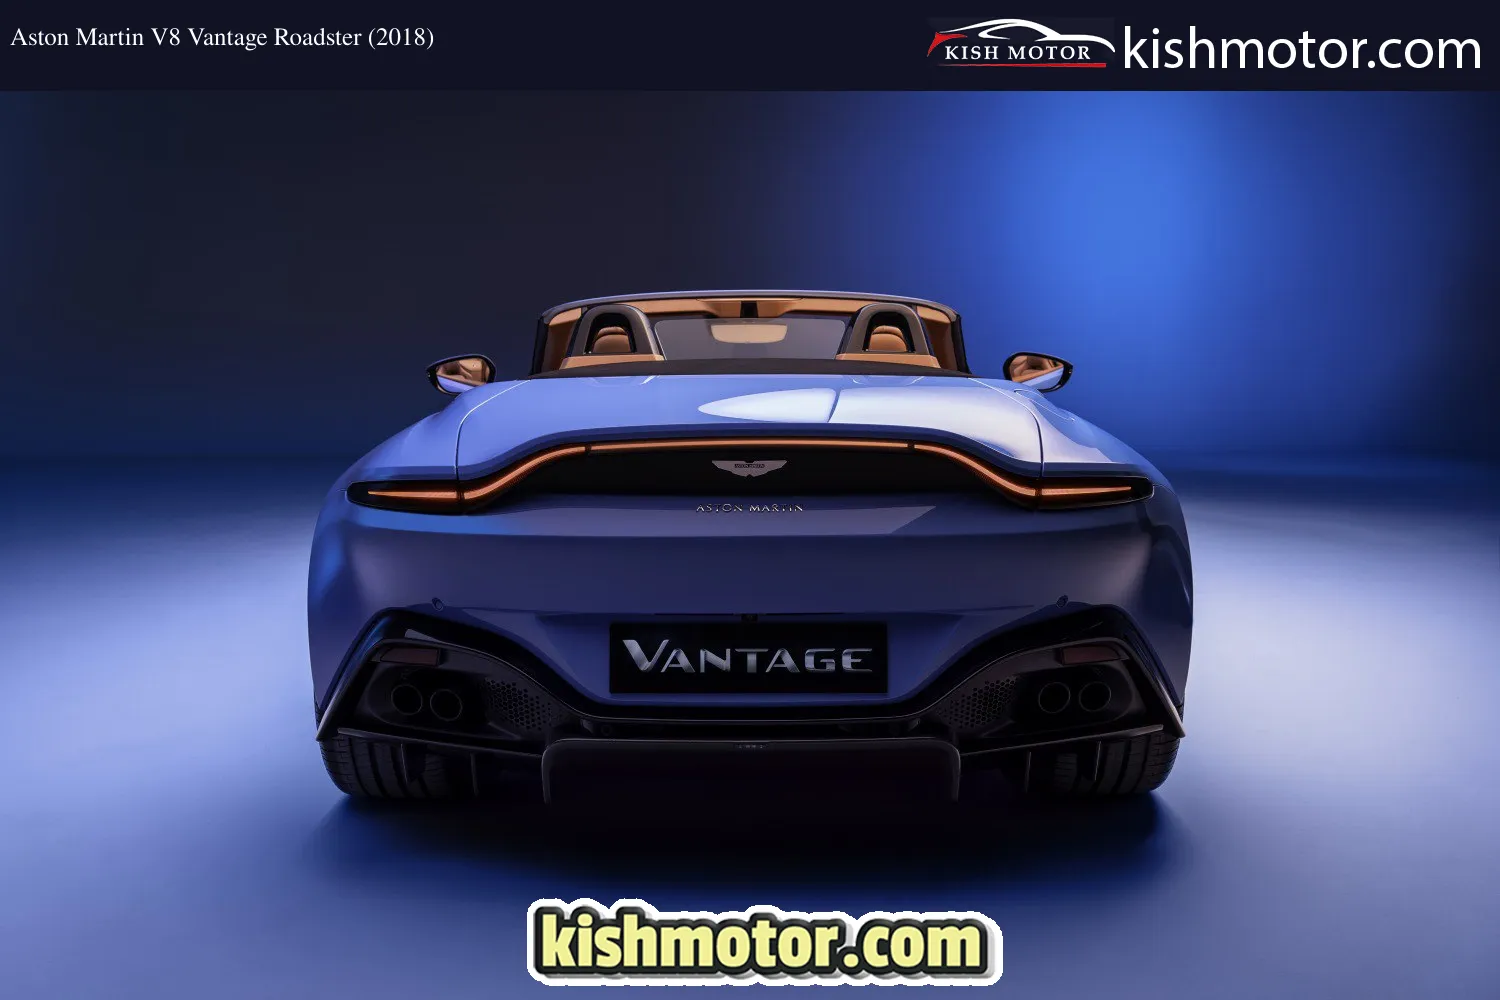 Aston Martin V8 Vantage Roadster (2018)